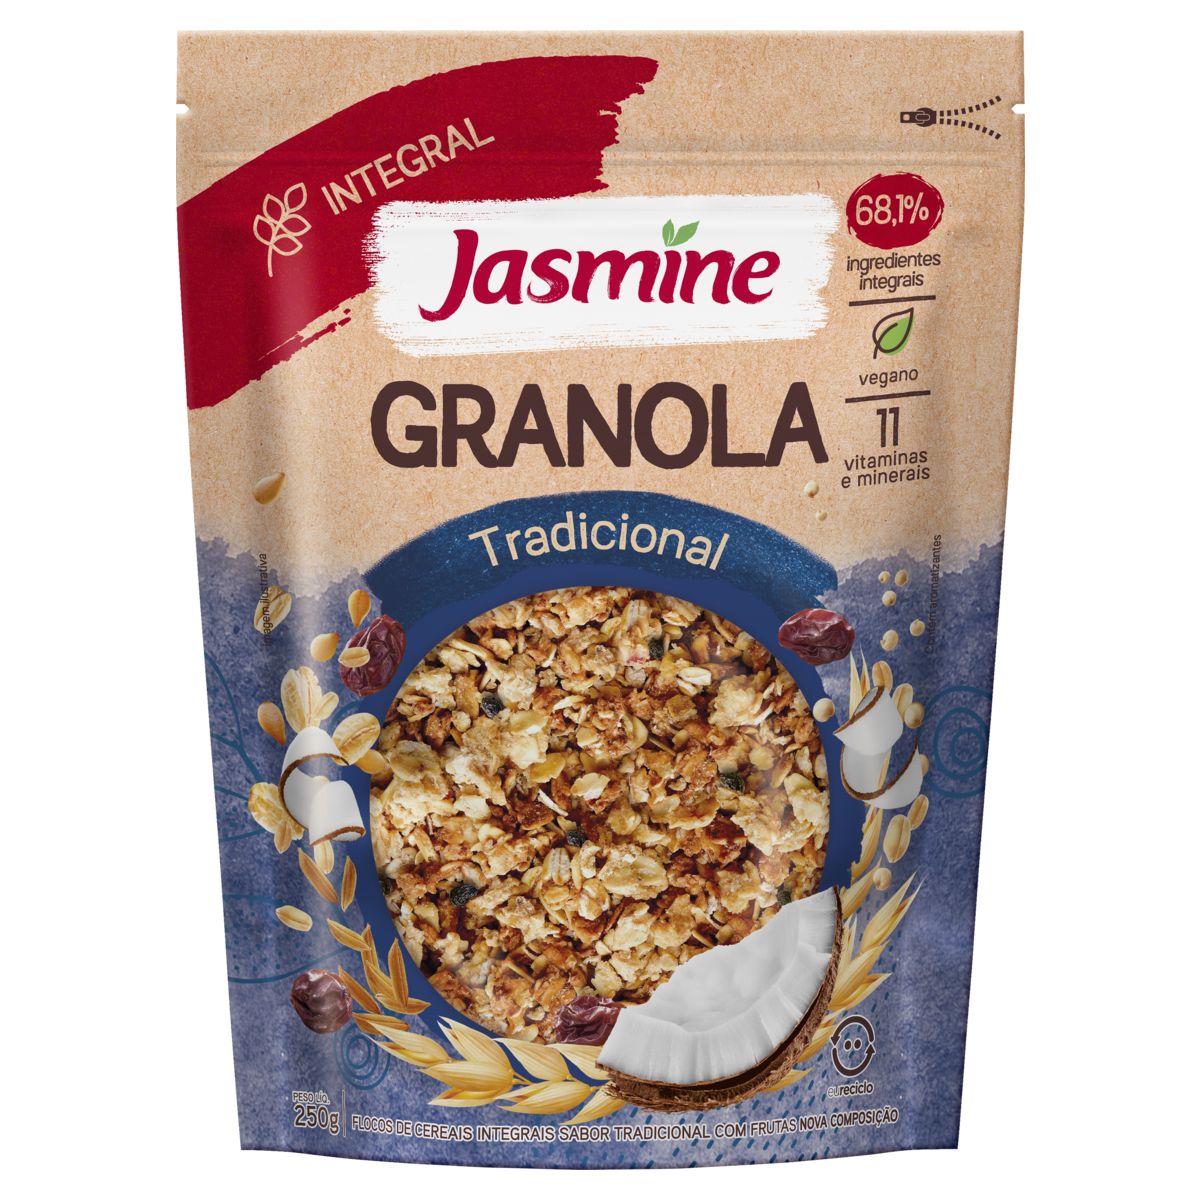 Granola Jasmine 68,1% Integral Tradicional Pouch 250g